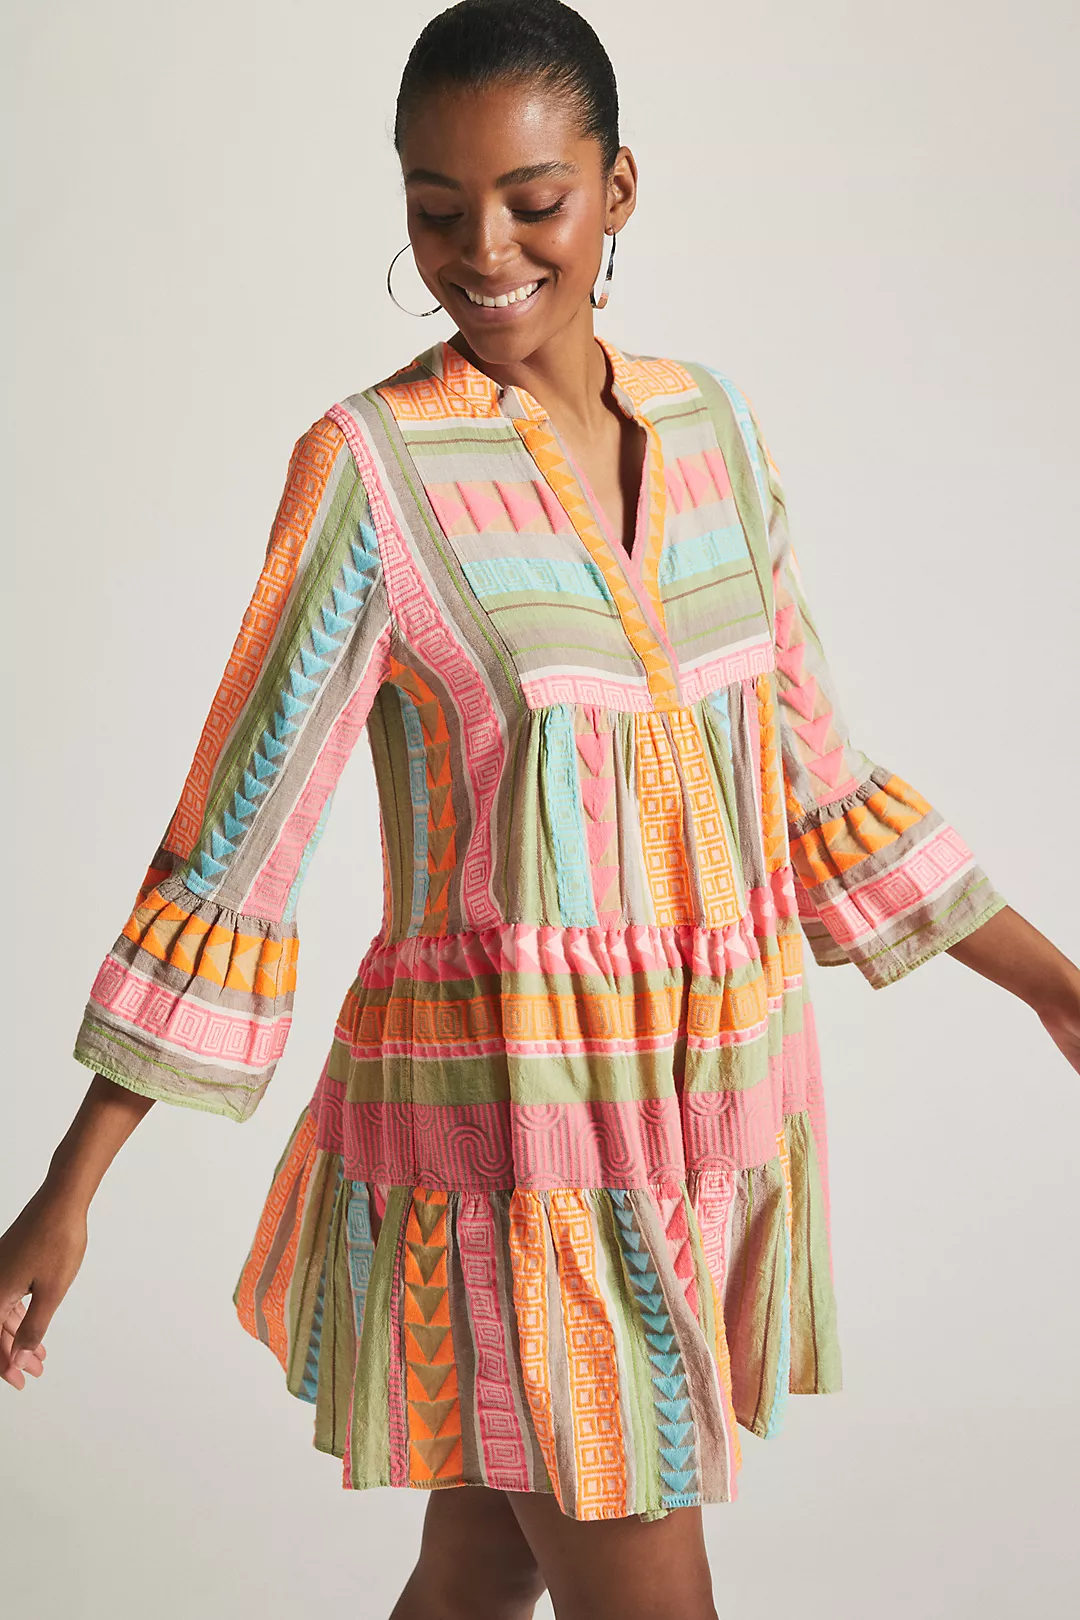 delightful spring dresses from Anthropologie - stripe dress - dresses- 